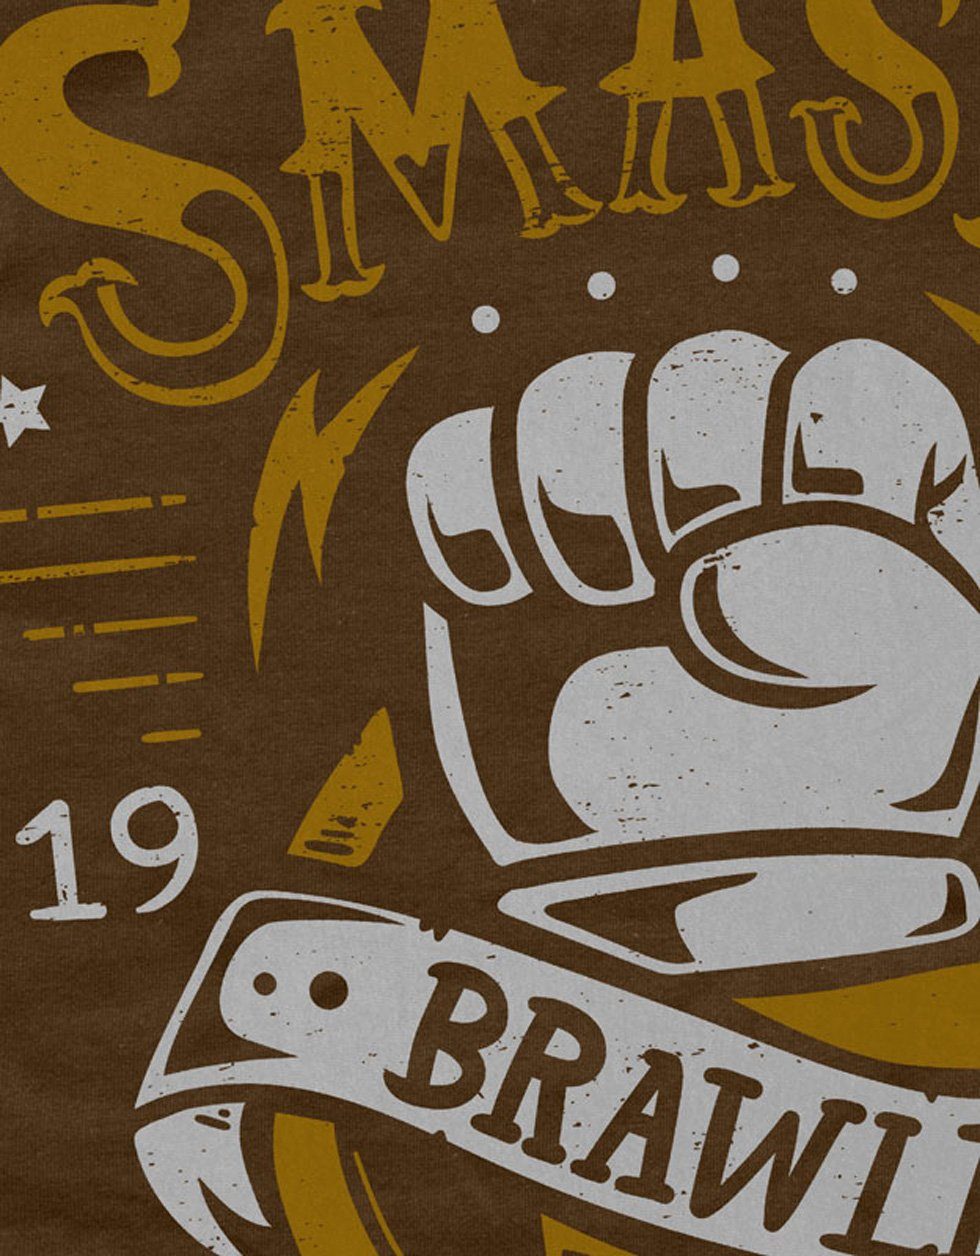 bros Smash Brawler braun T-Shirt Switch Herren Print-Shirt style3 Ultimate